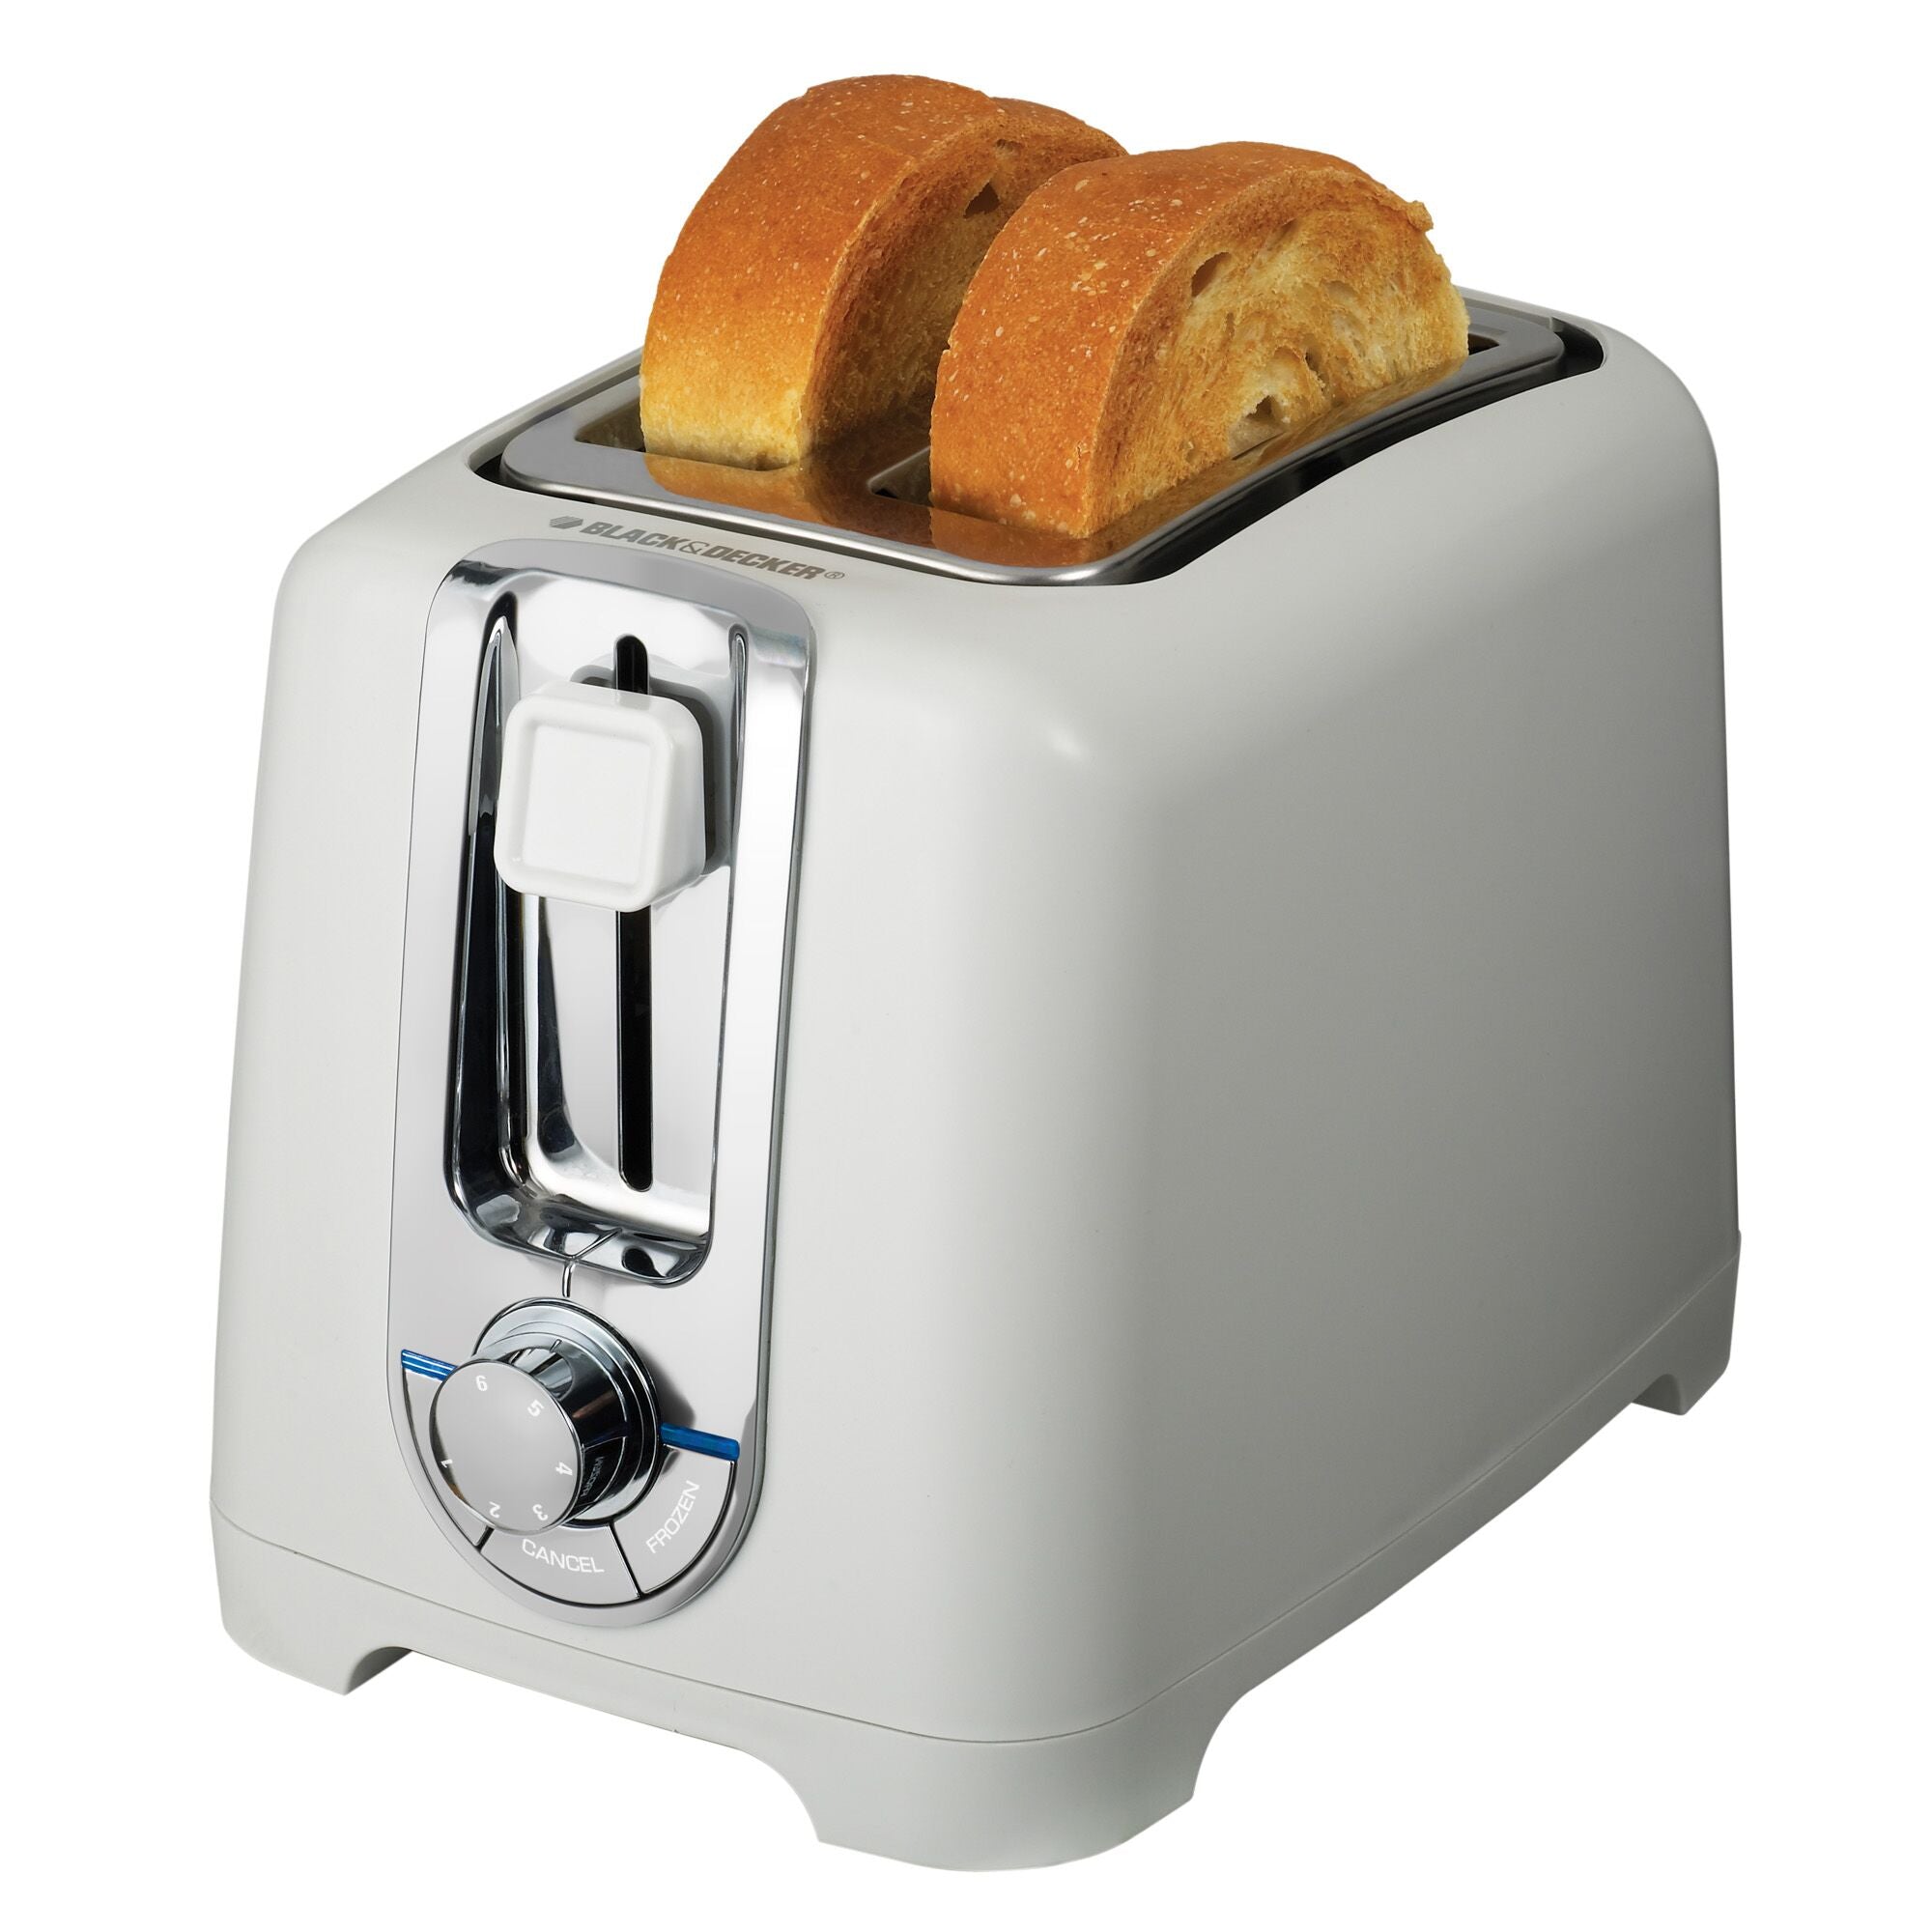 Тостер Аселайн ТС-2000. Тостер Black Toast. KL-5067 белый тостер Kelli. Хлеб для тостера. Тостер для хлеба купить